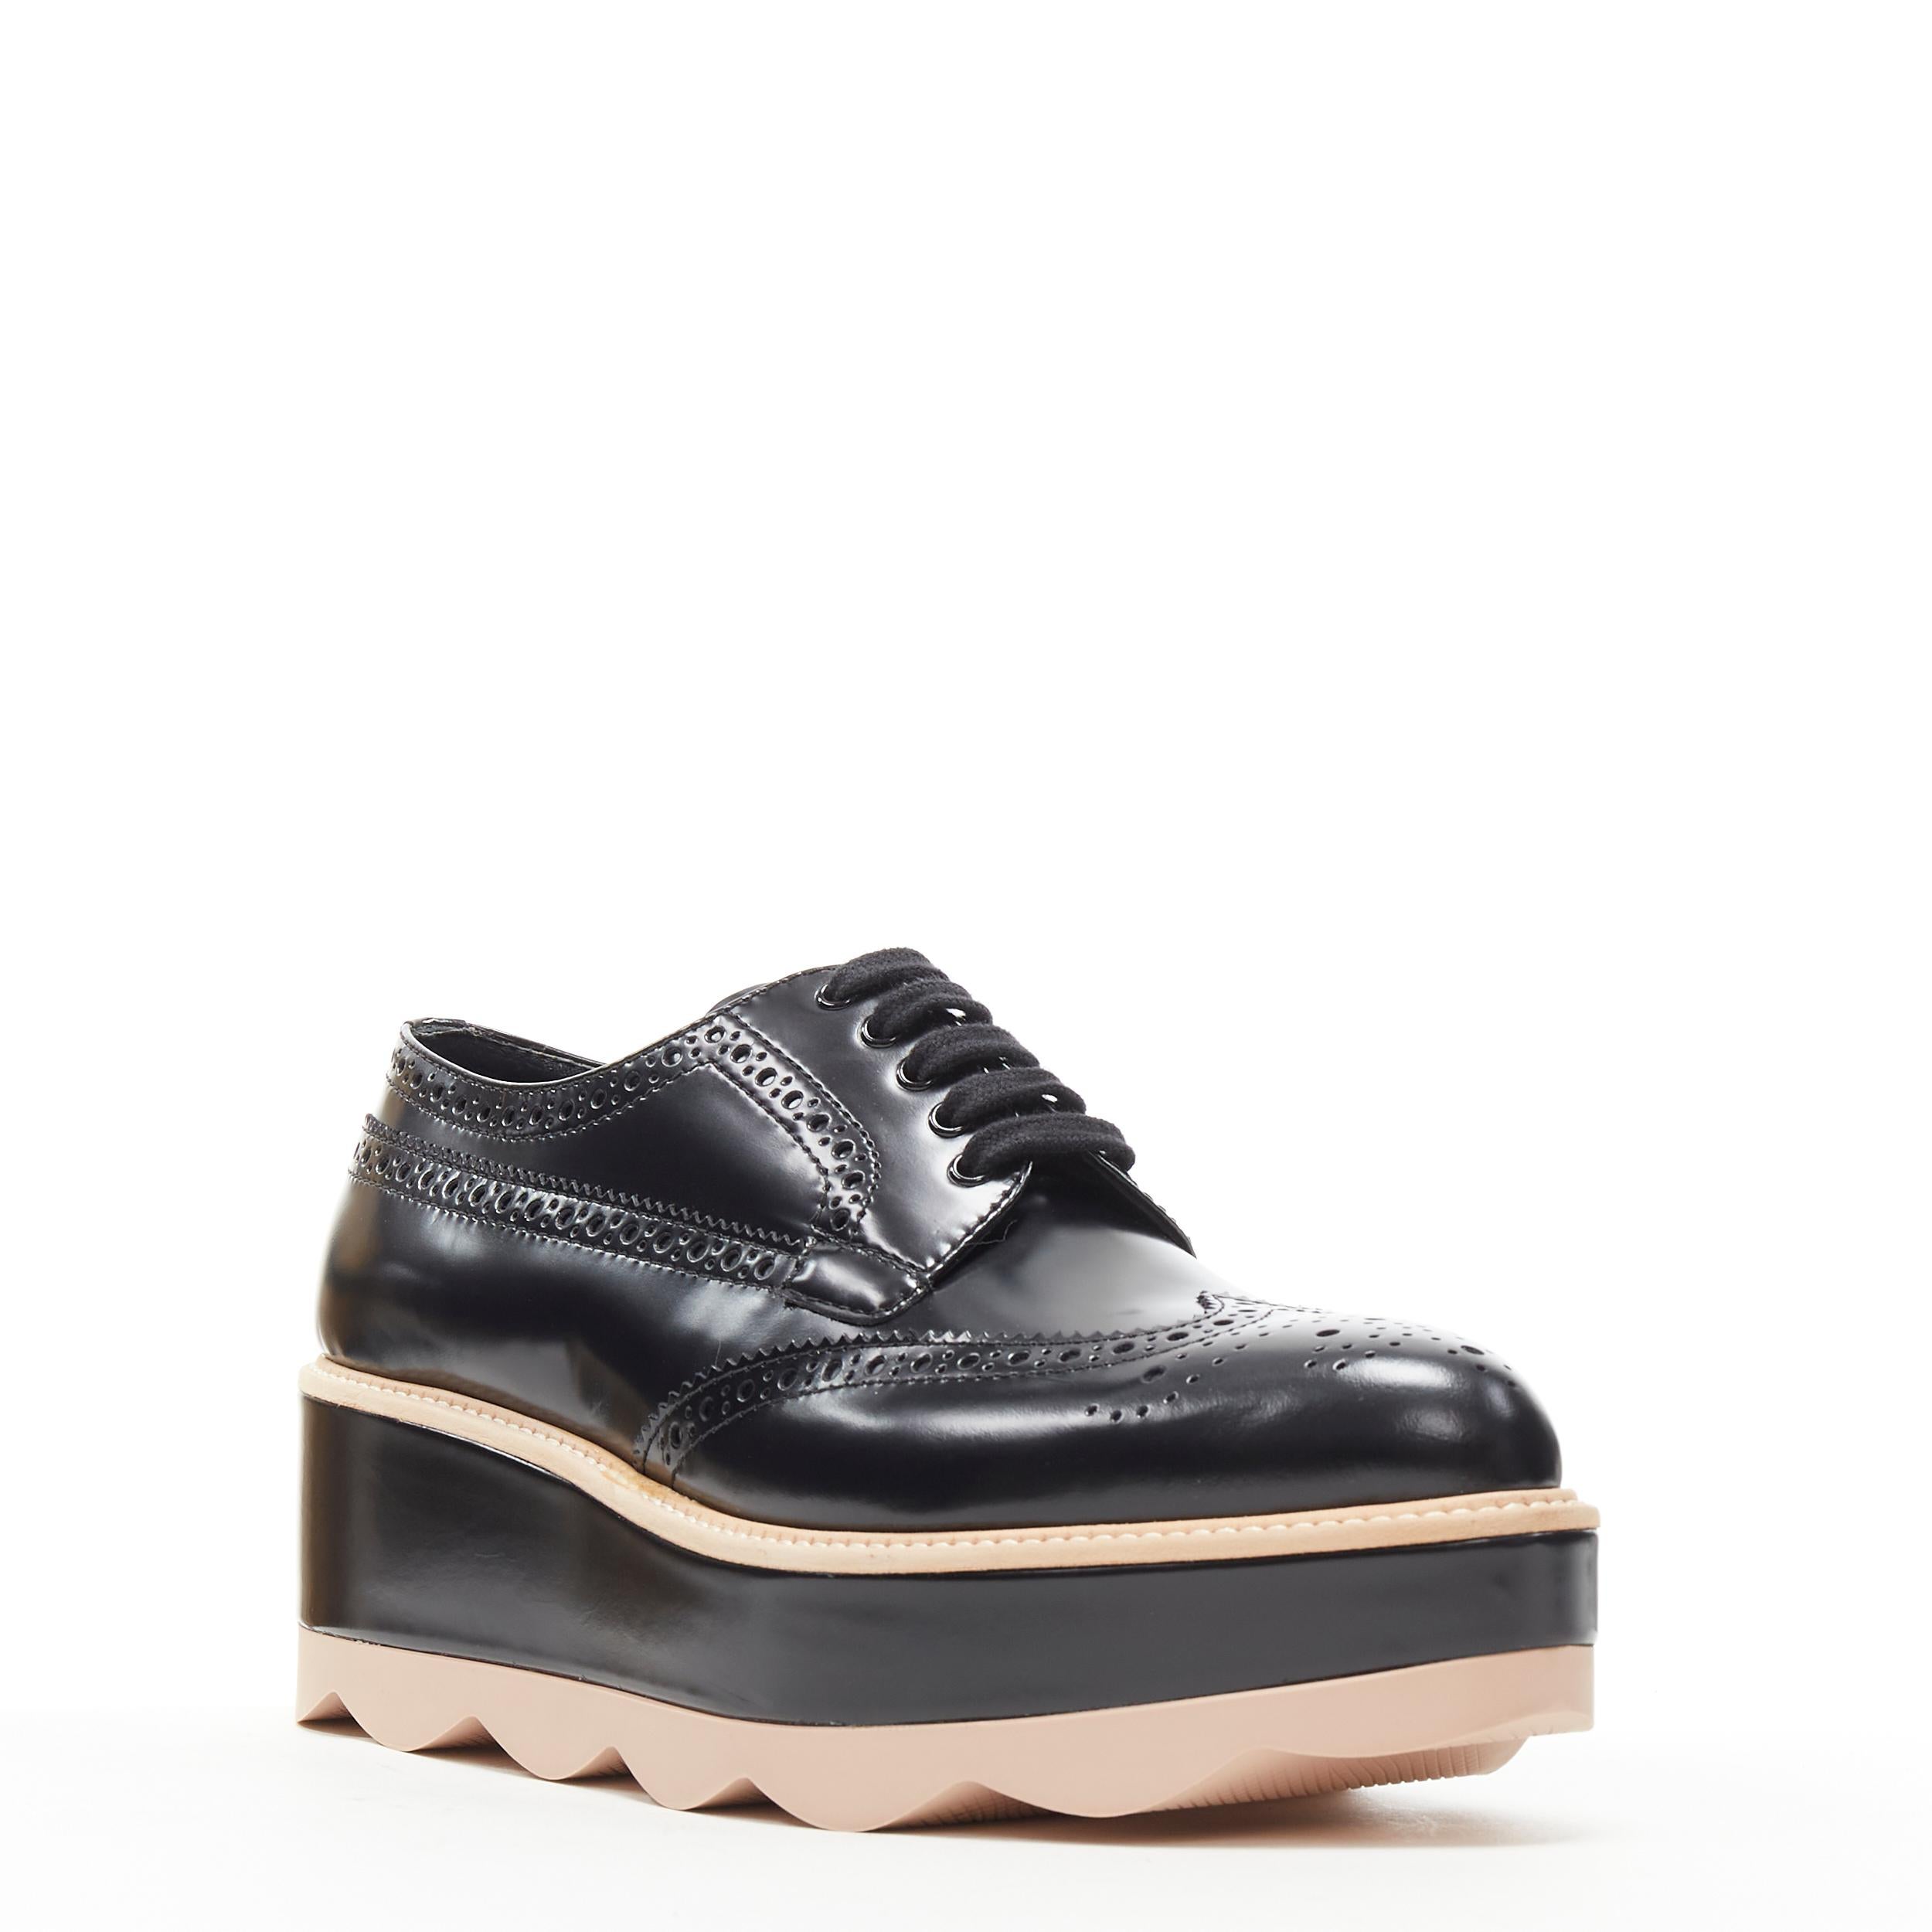 new PRADA black leather platform wedge perforated brogue derby shoe EU38.5 
Reference: TGAS/B00777 
Brand: Prada 
Designer: Miuccia Prada 
Model: Platform brogue black 
Collection: 2016 
Material: Leather 
Color: Black 
Pattern: Solid 
Closure: Lace